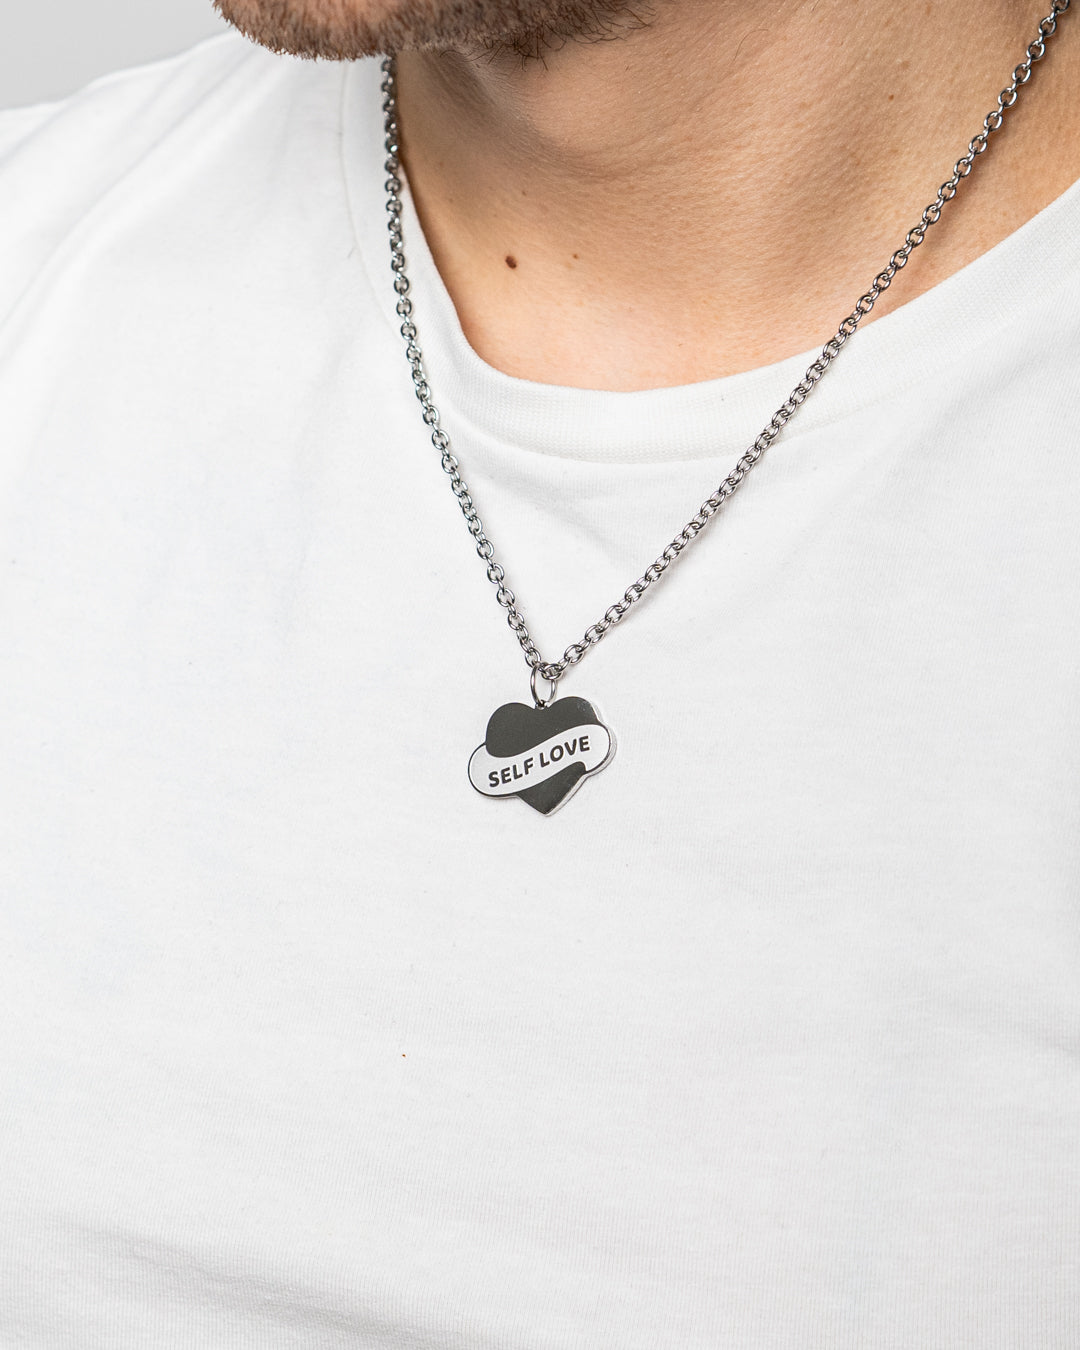 Self Love Necklace (Silver)